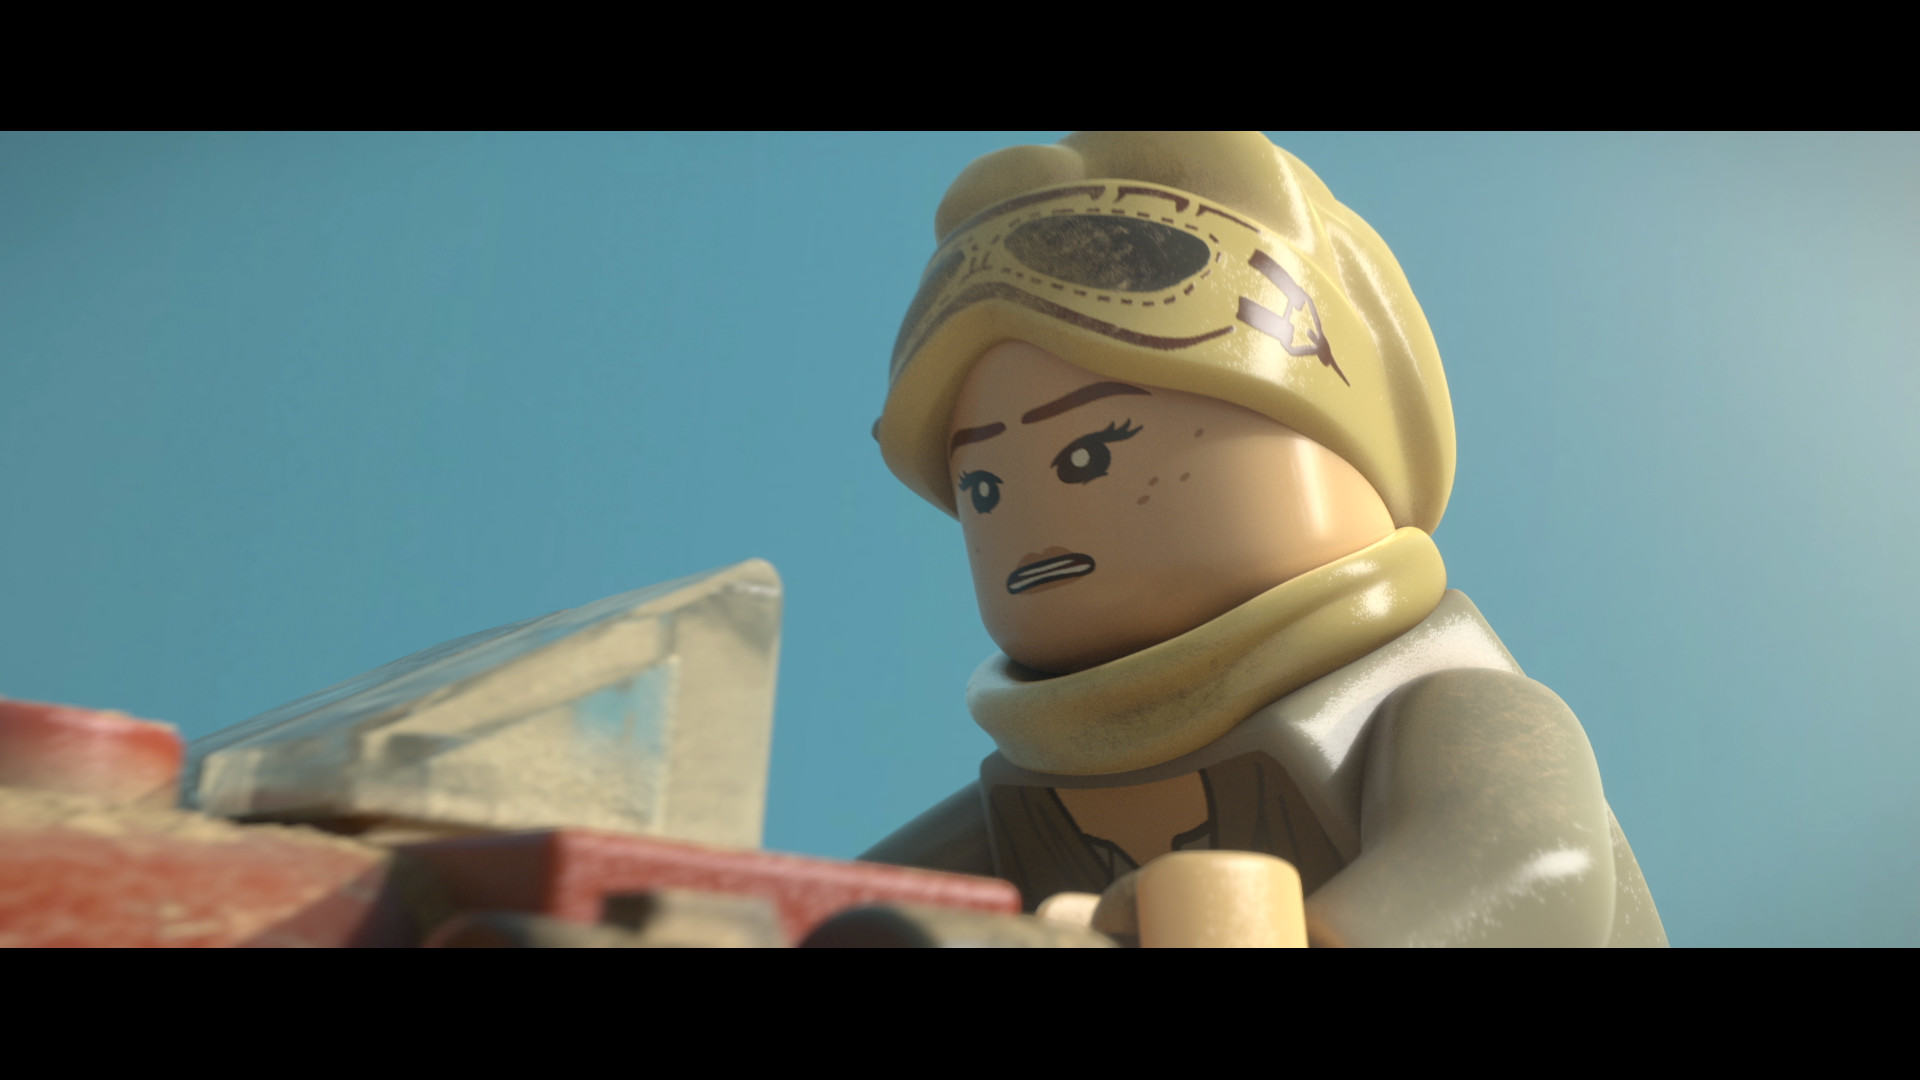 乐高星球大战:原力觉醒 lego star wars: the force awakens 的图片